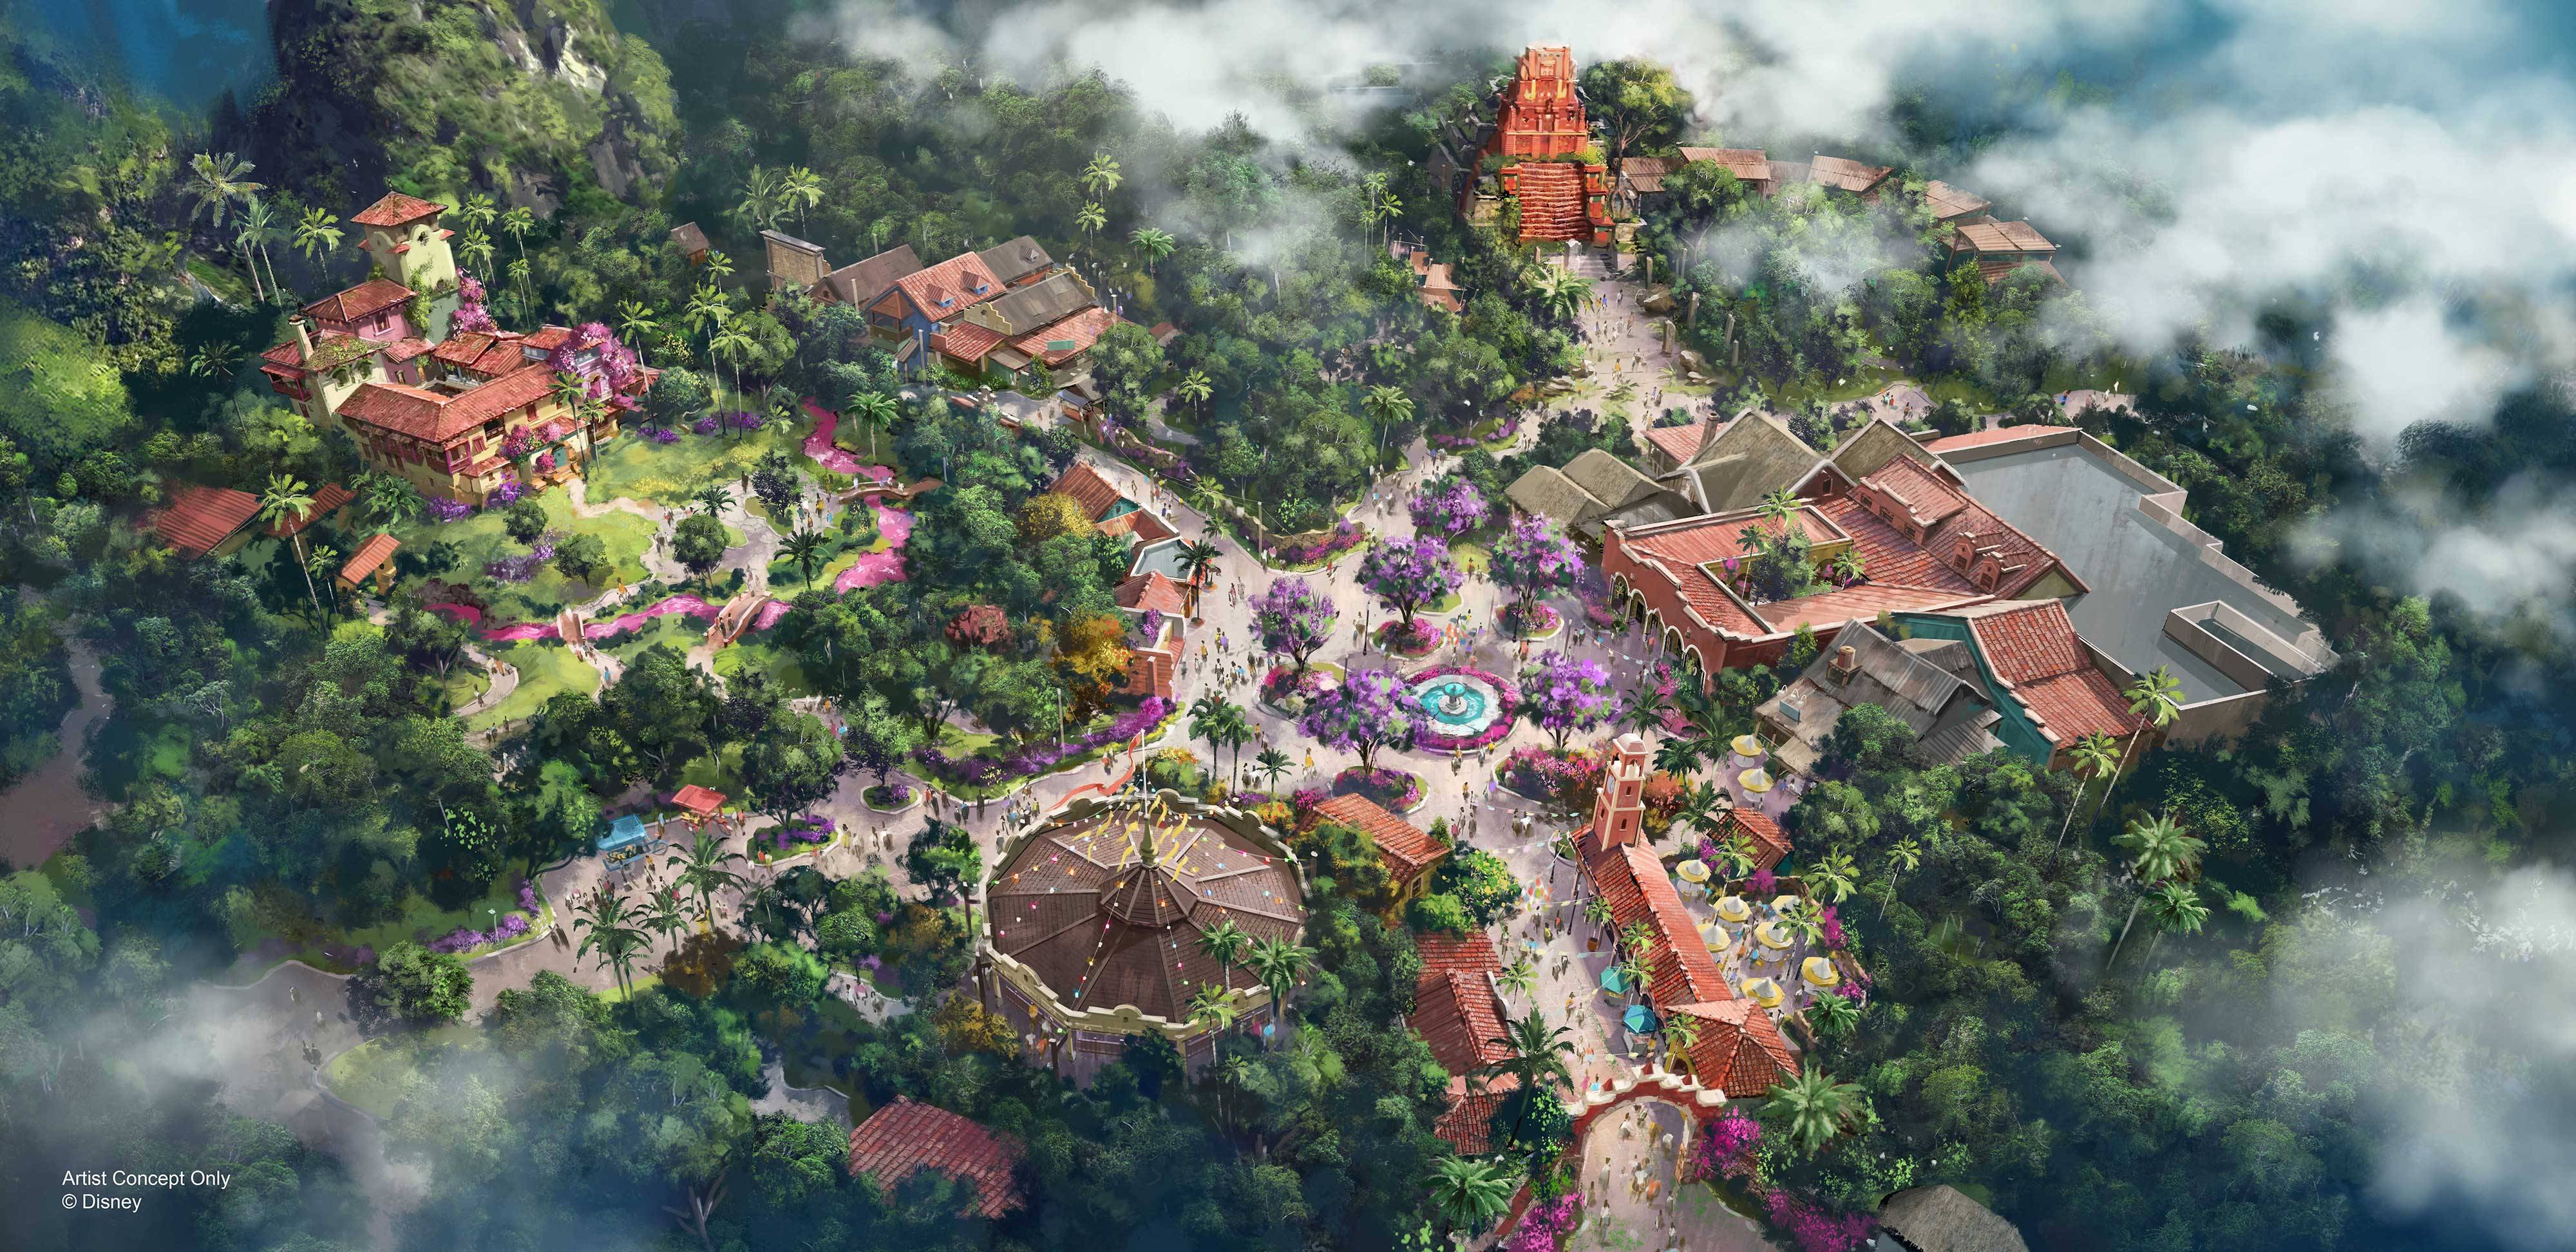 Disney Parks Boss Josh D'Amaro talks more about Disney's plans for Indiana Jones at Disney's Animal Kingdom